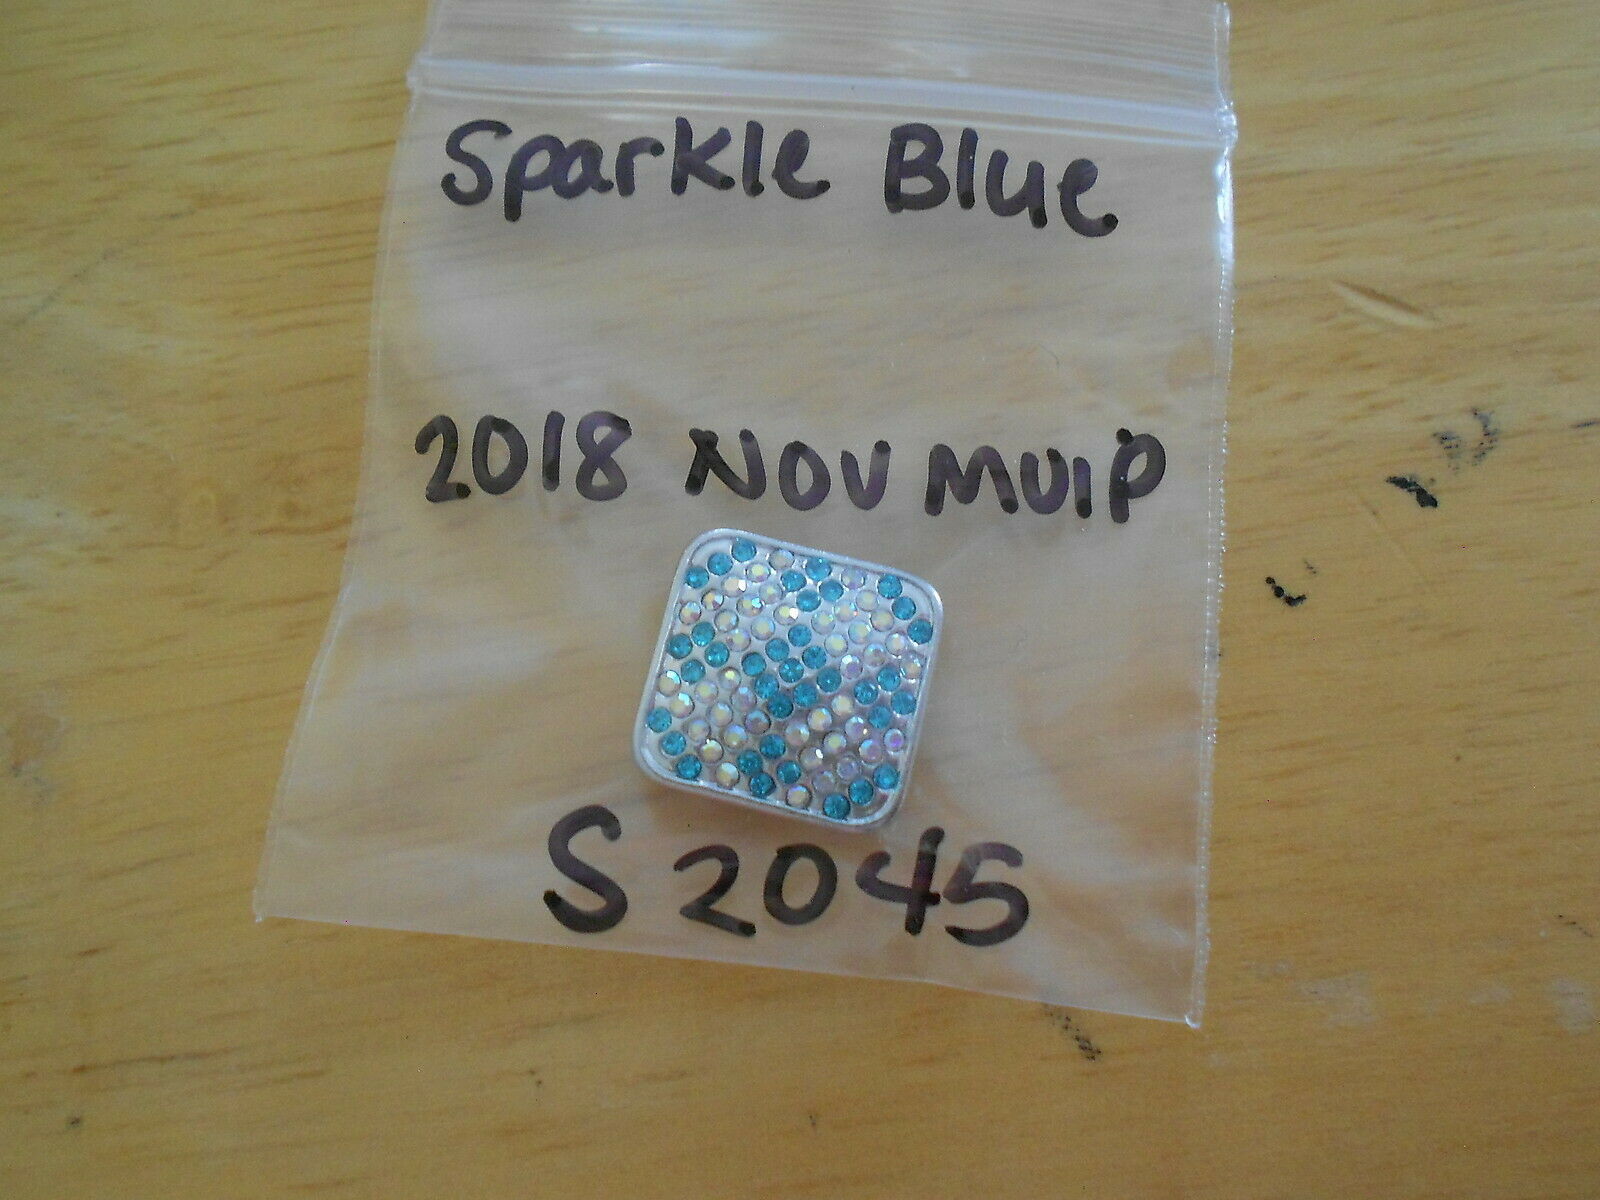 Primary image for Magnolia & Vine 18 mm Original Snap (new) SPARKLE BLUE 2018 NOV MVIP (S2045)